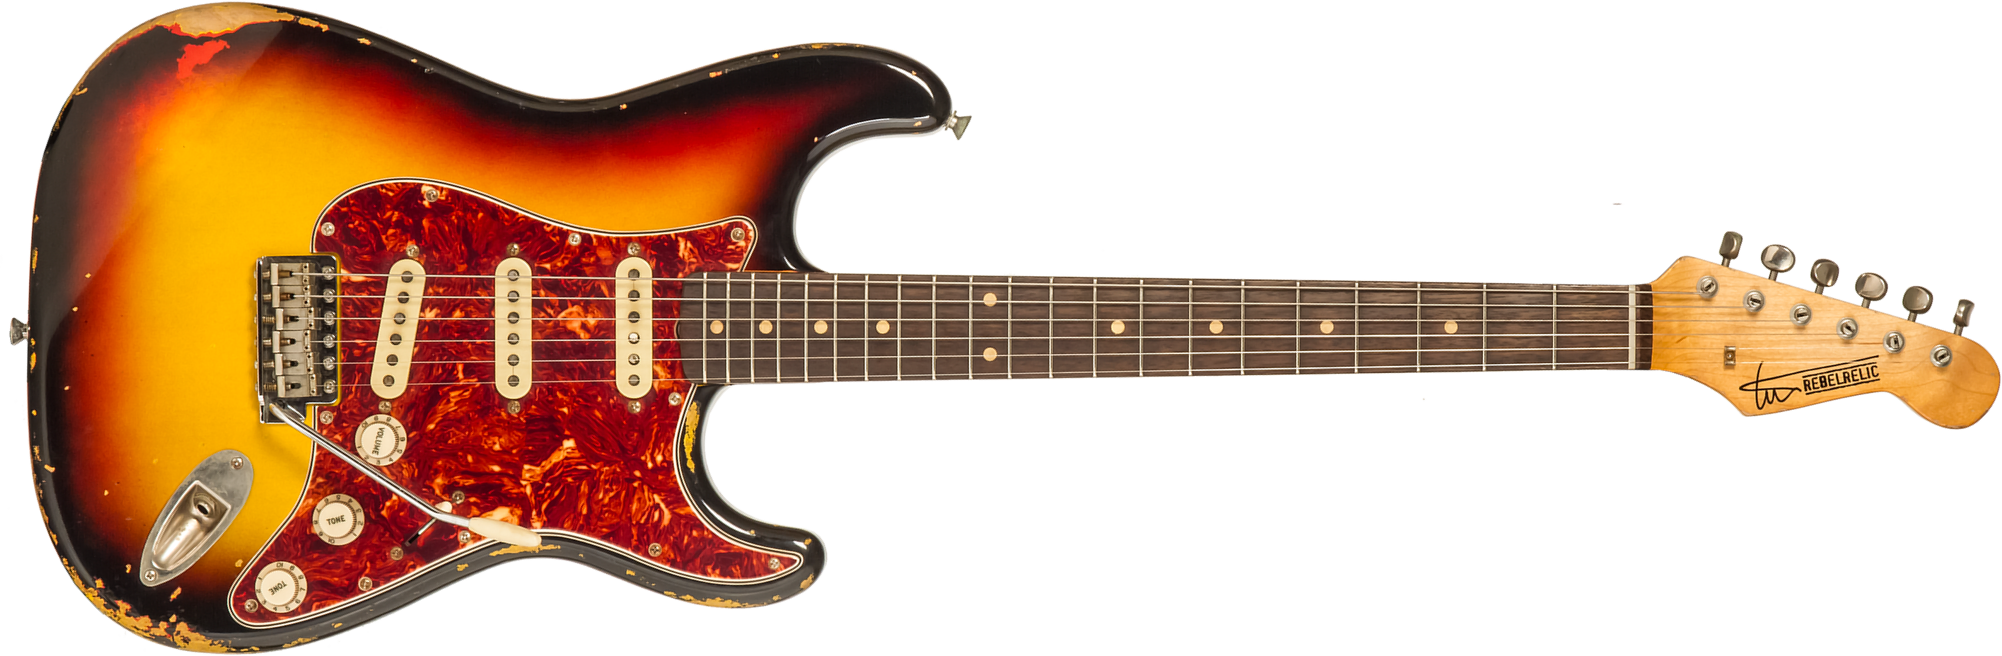 Rebelrelic S-series 1962 3s Trem Rw #231009 - 3-tone Sunburst - Str shape electric guitar - Main picture